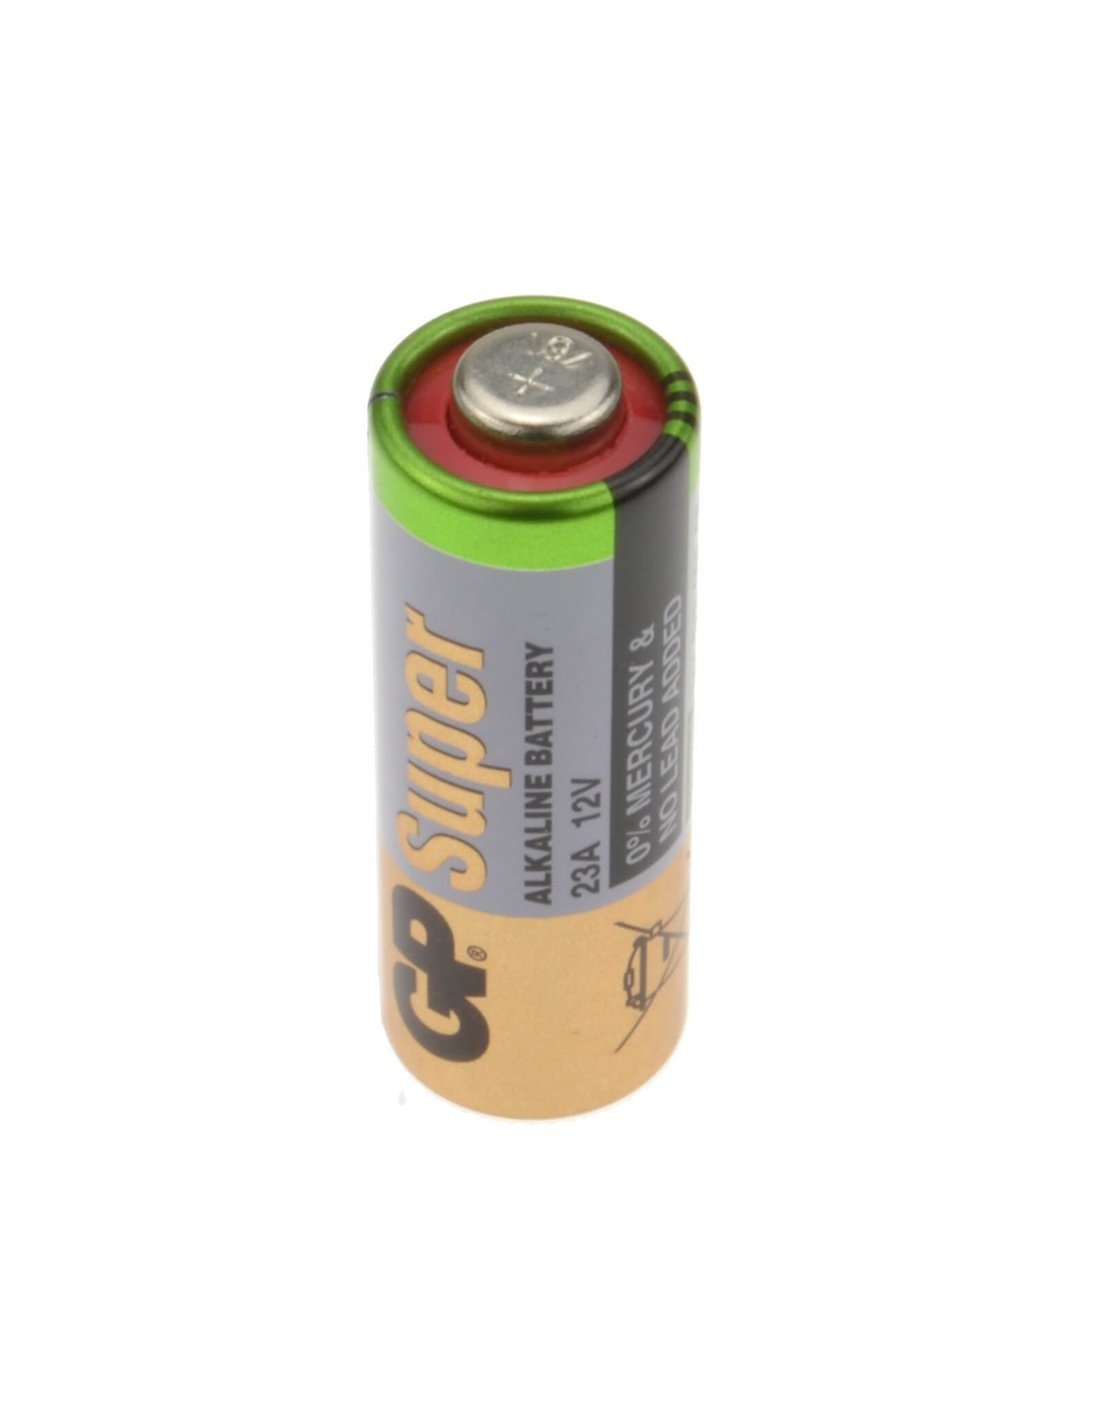 GP23AE High Voltage 12V Batteries for Key Fob Remote GP 23A